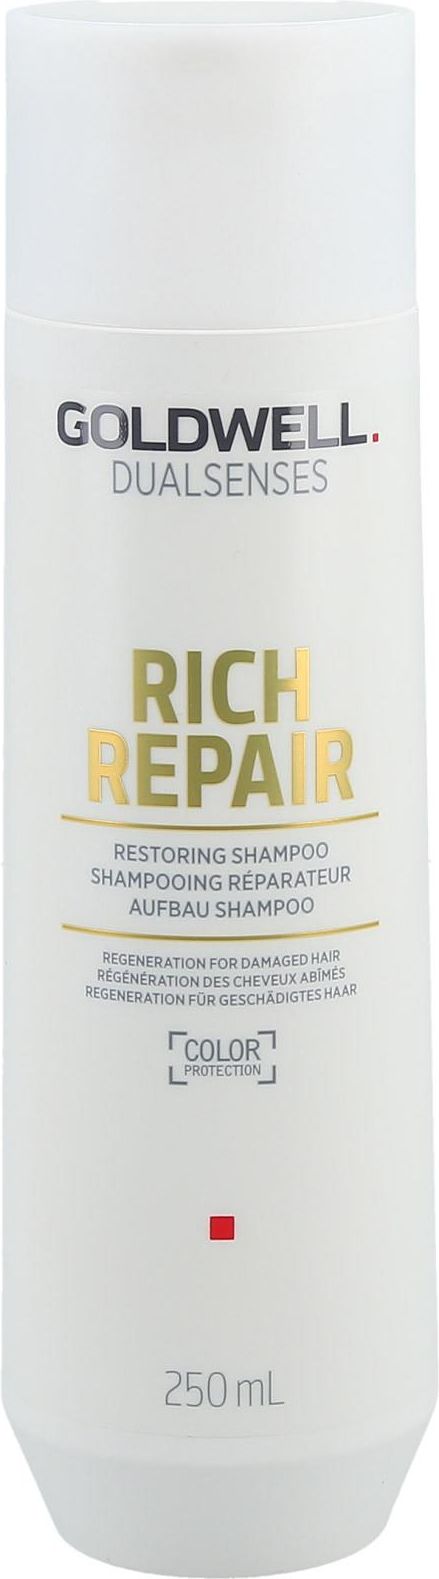 goldwell rich repair szampon 250m opinie